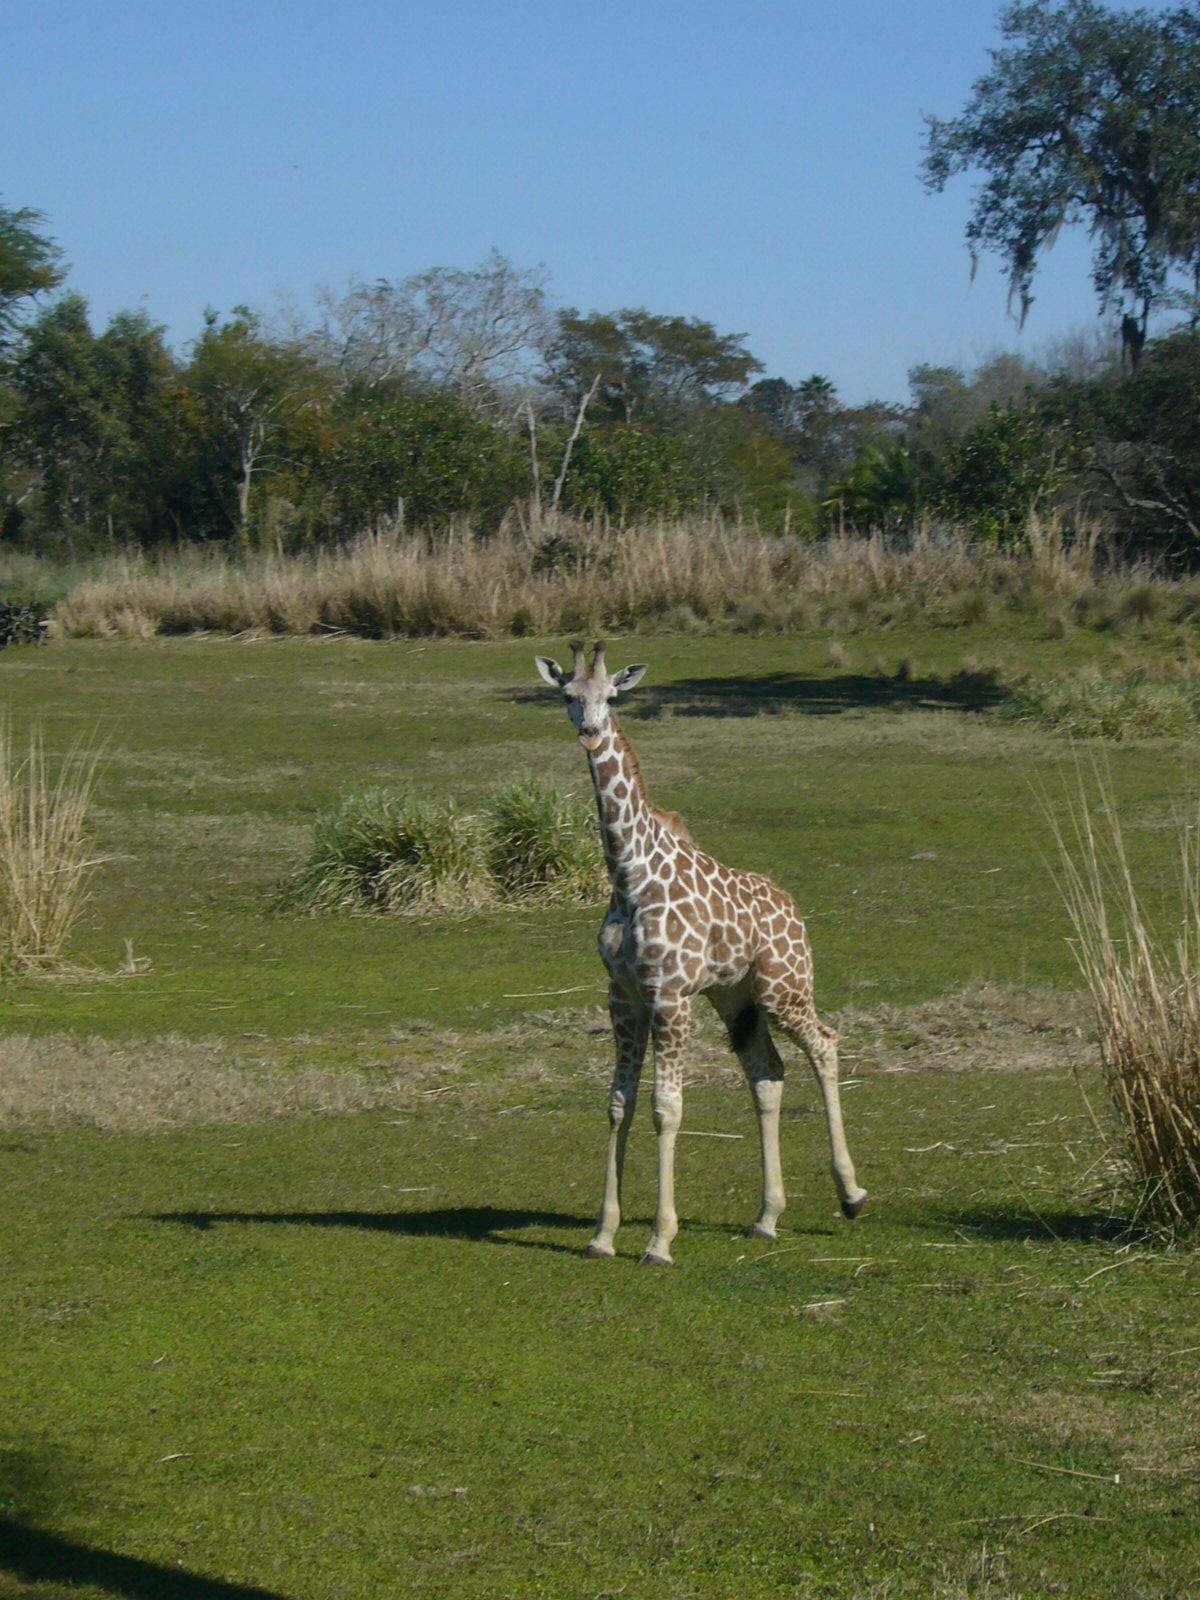 Animal Kingdom - Giraffe at Kilimanjaro Safaris